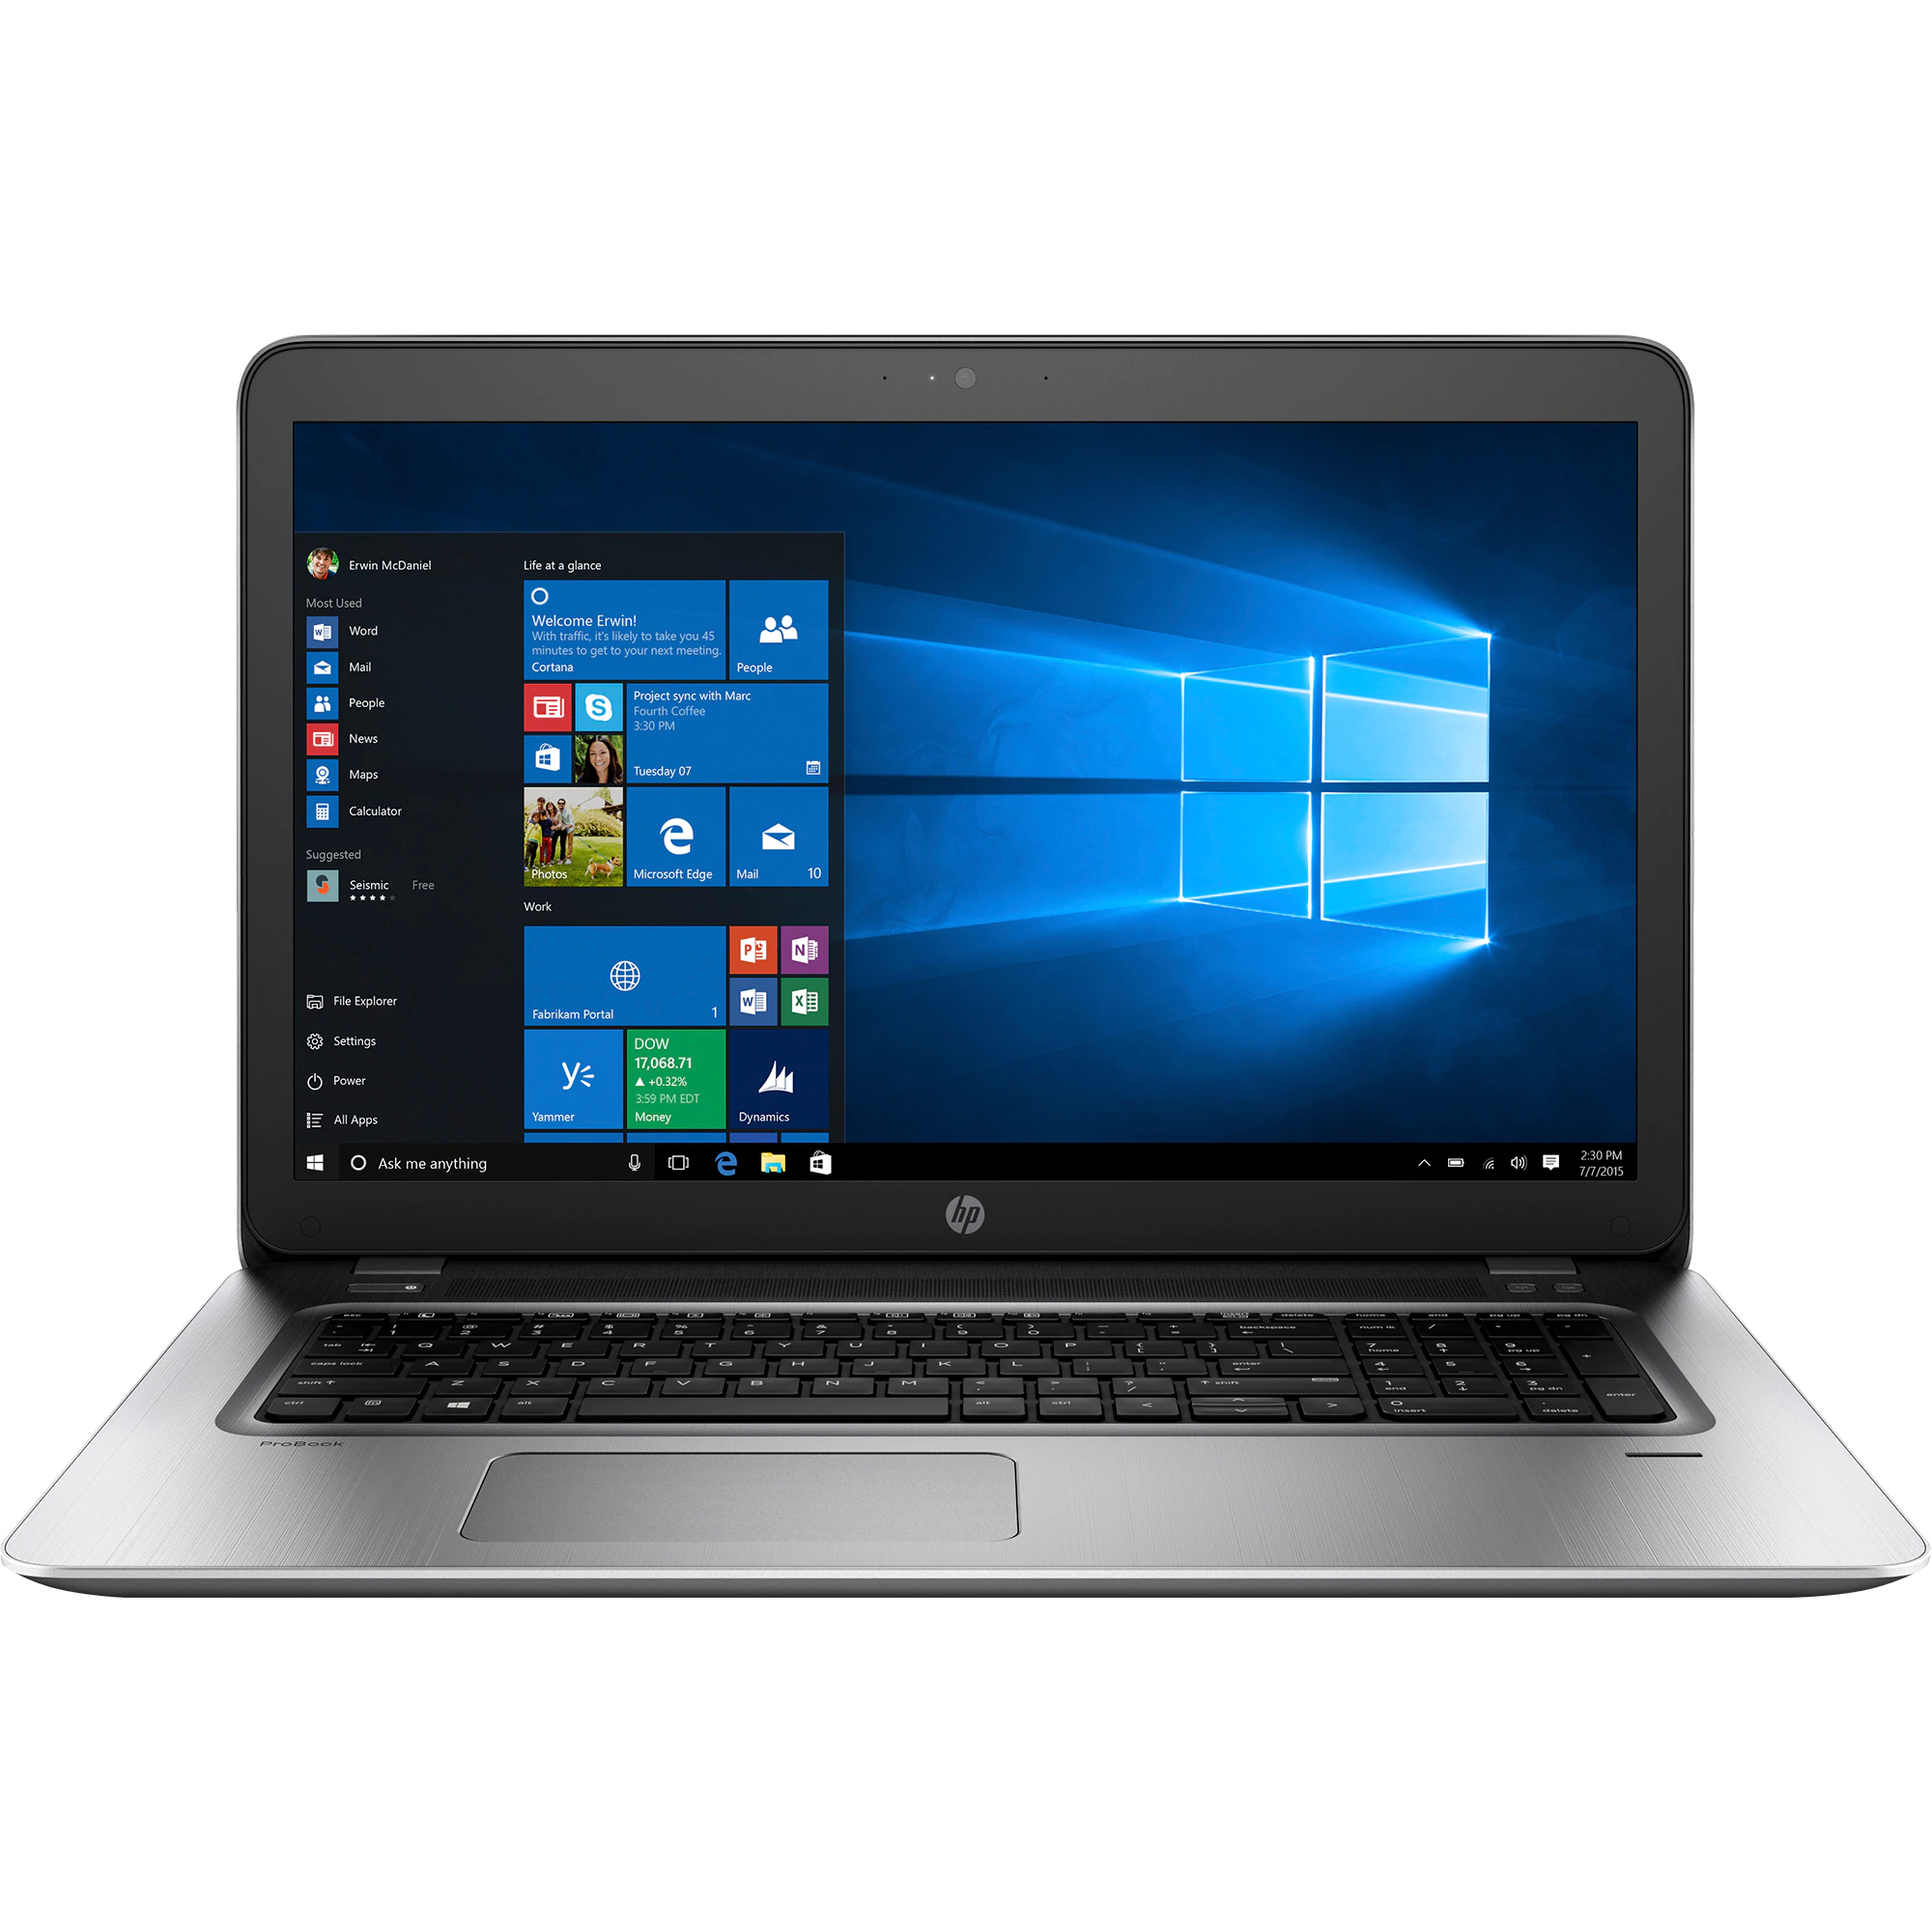 Laptop HP ProBook 470 G4, Intel Core i5-7200U 2.50GHz, 8GB DDR4, 120GB SSD, DVD-RW, 17.3 Inch, Webcam, Tastatura Numerica